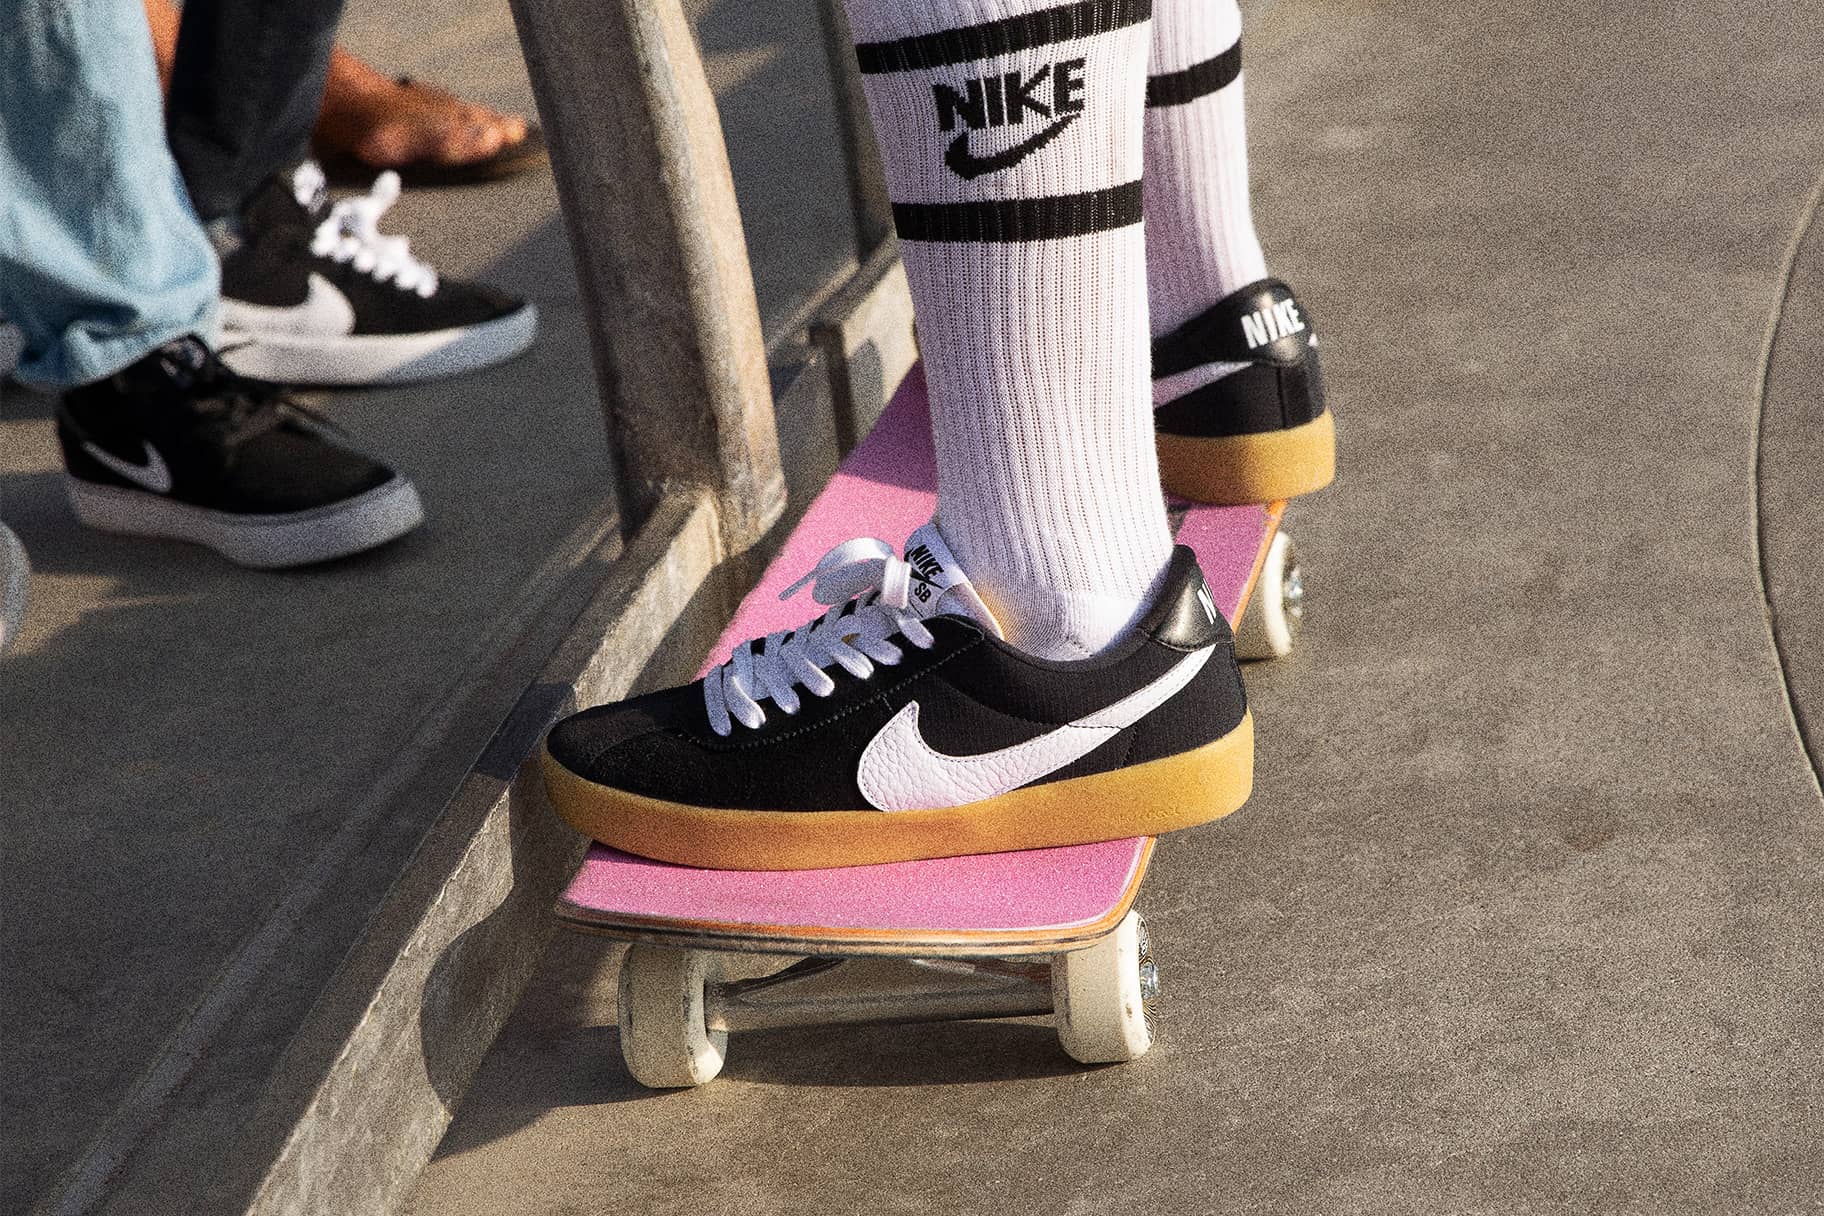 Implacable comer Sin lugar a dudas El calzado de Nike ideal para skateboarding. Nike